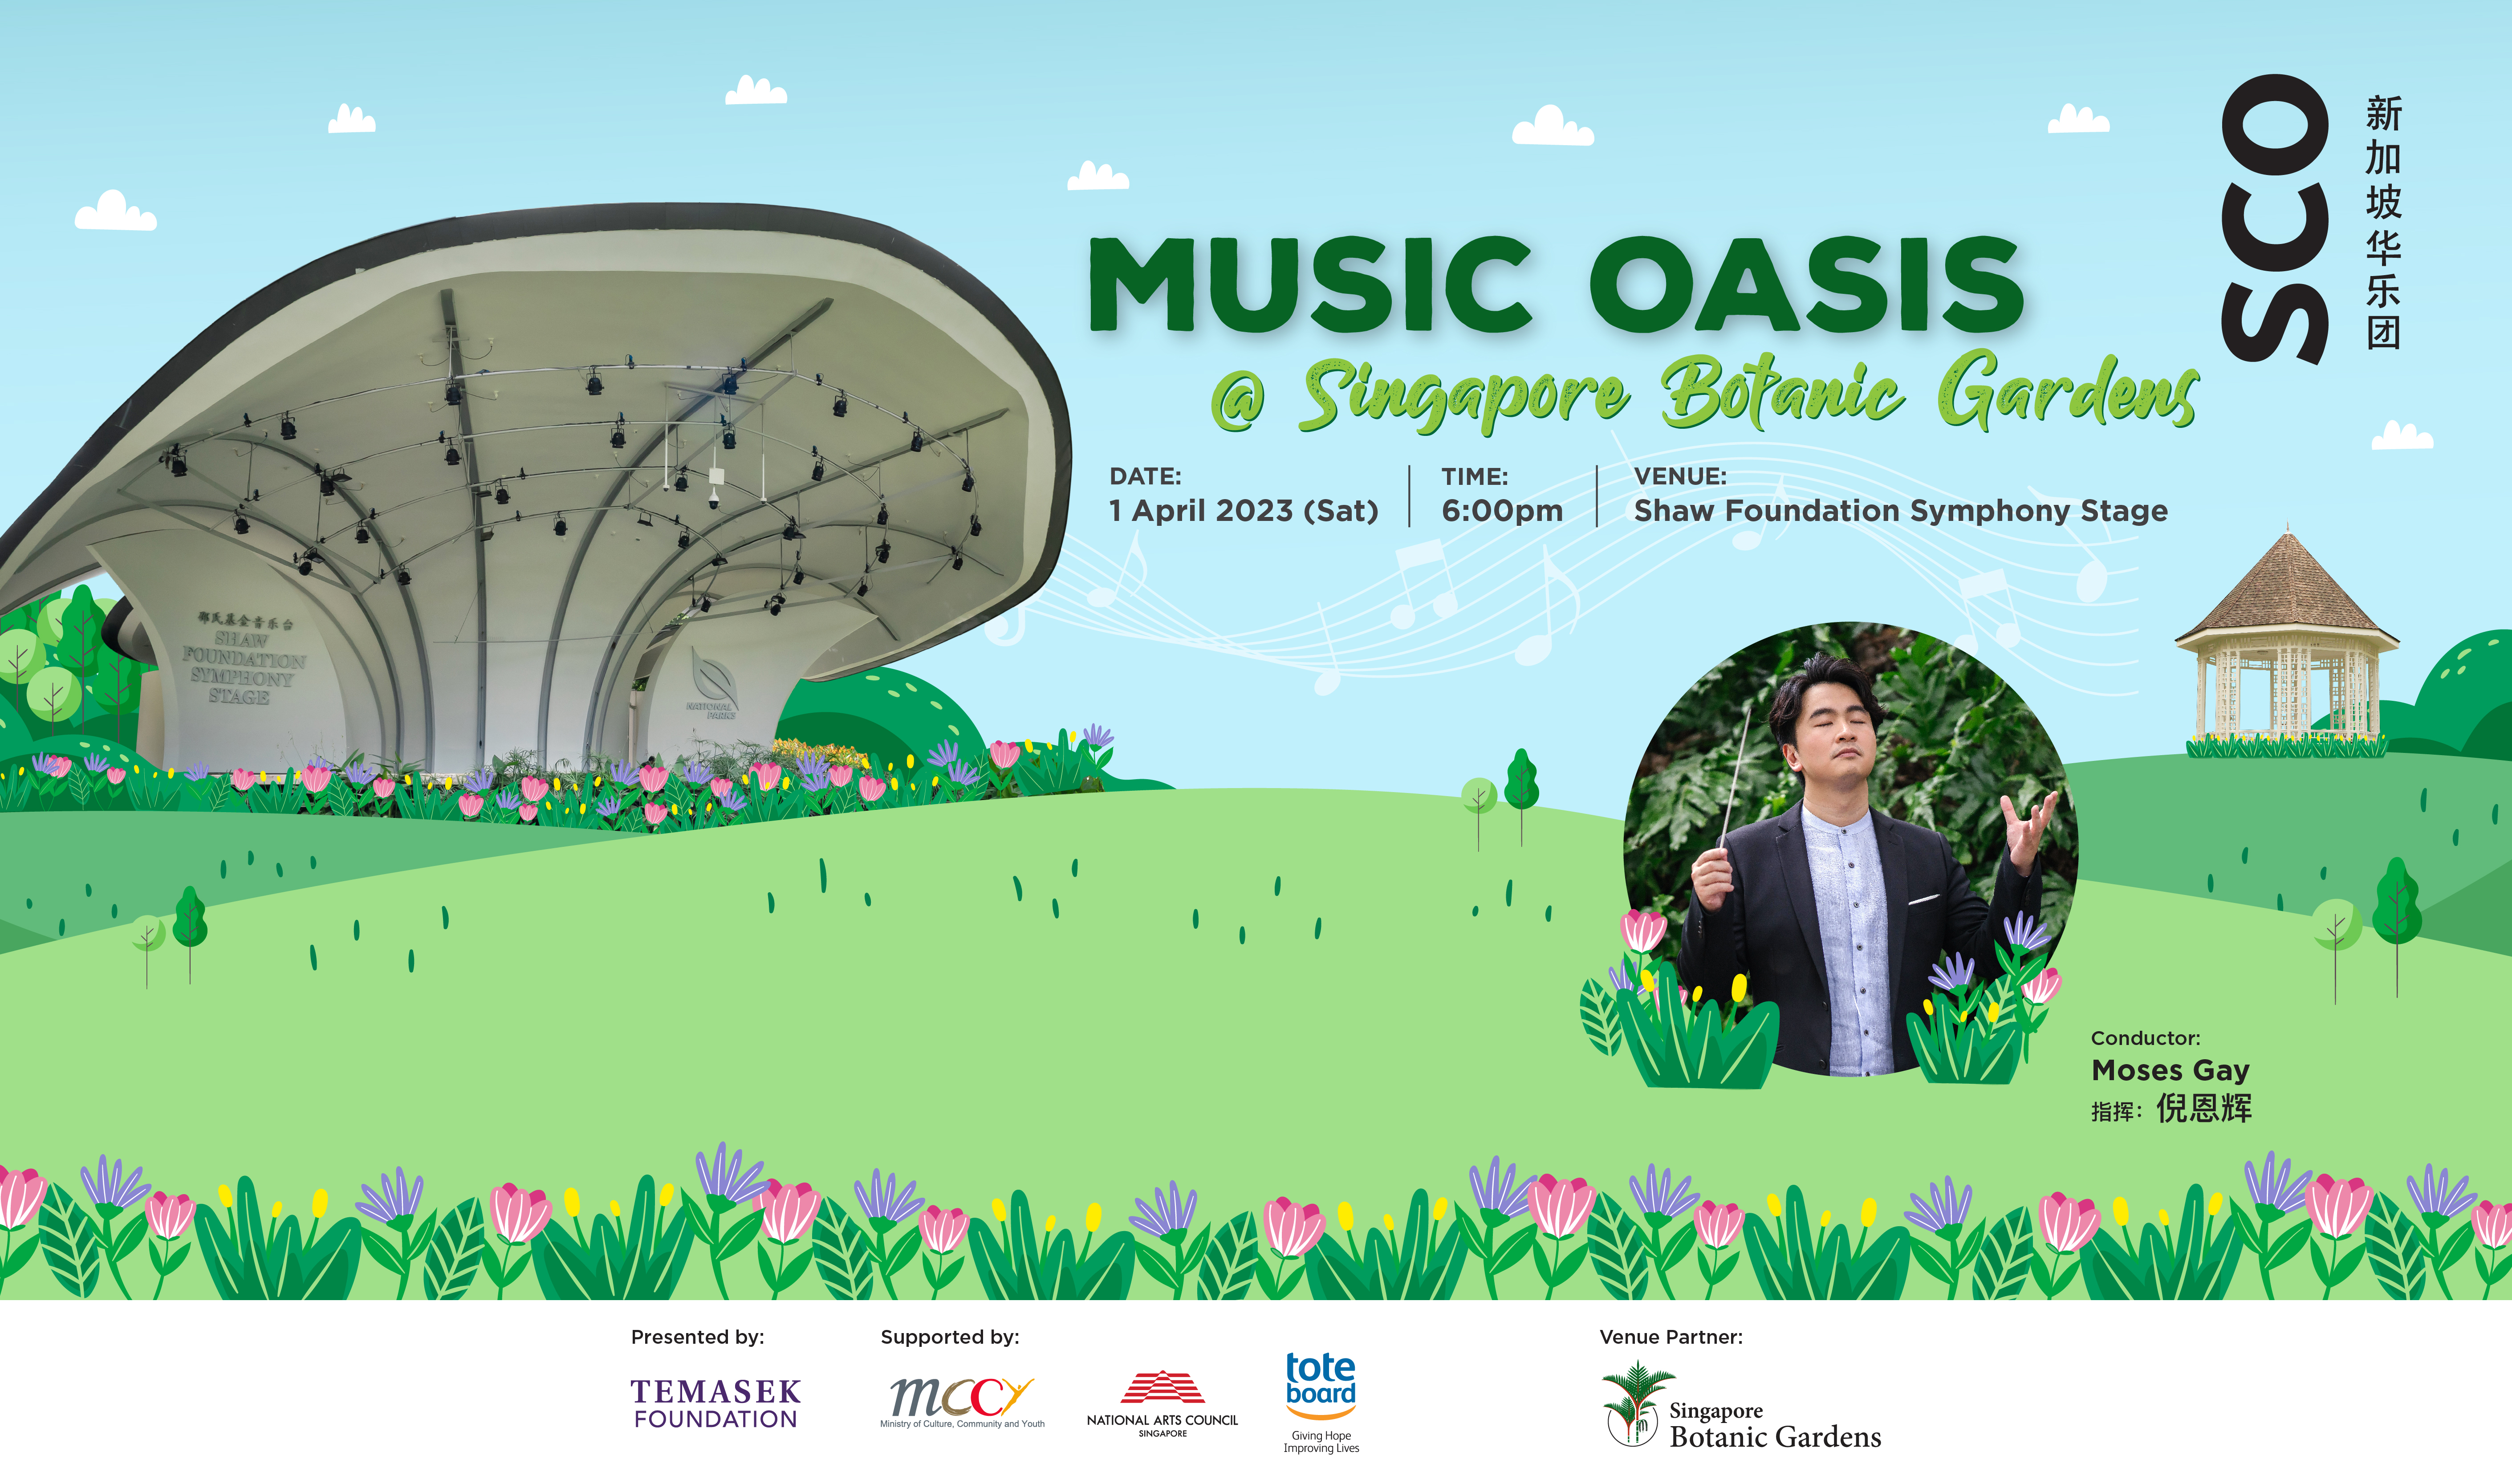 Music Oasis @ Singapore Botanic Gardens